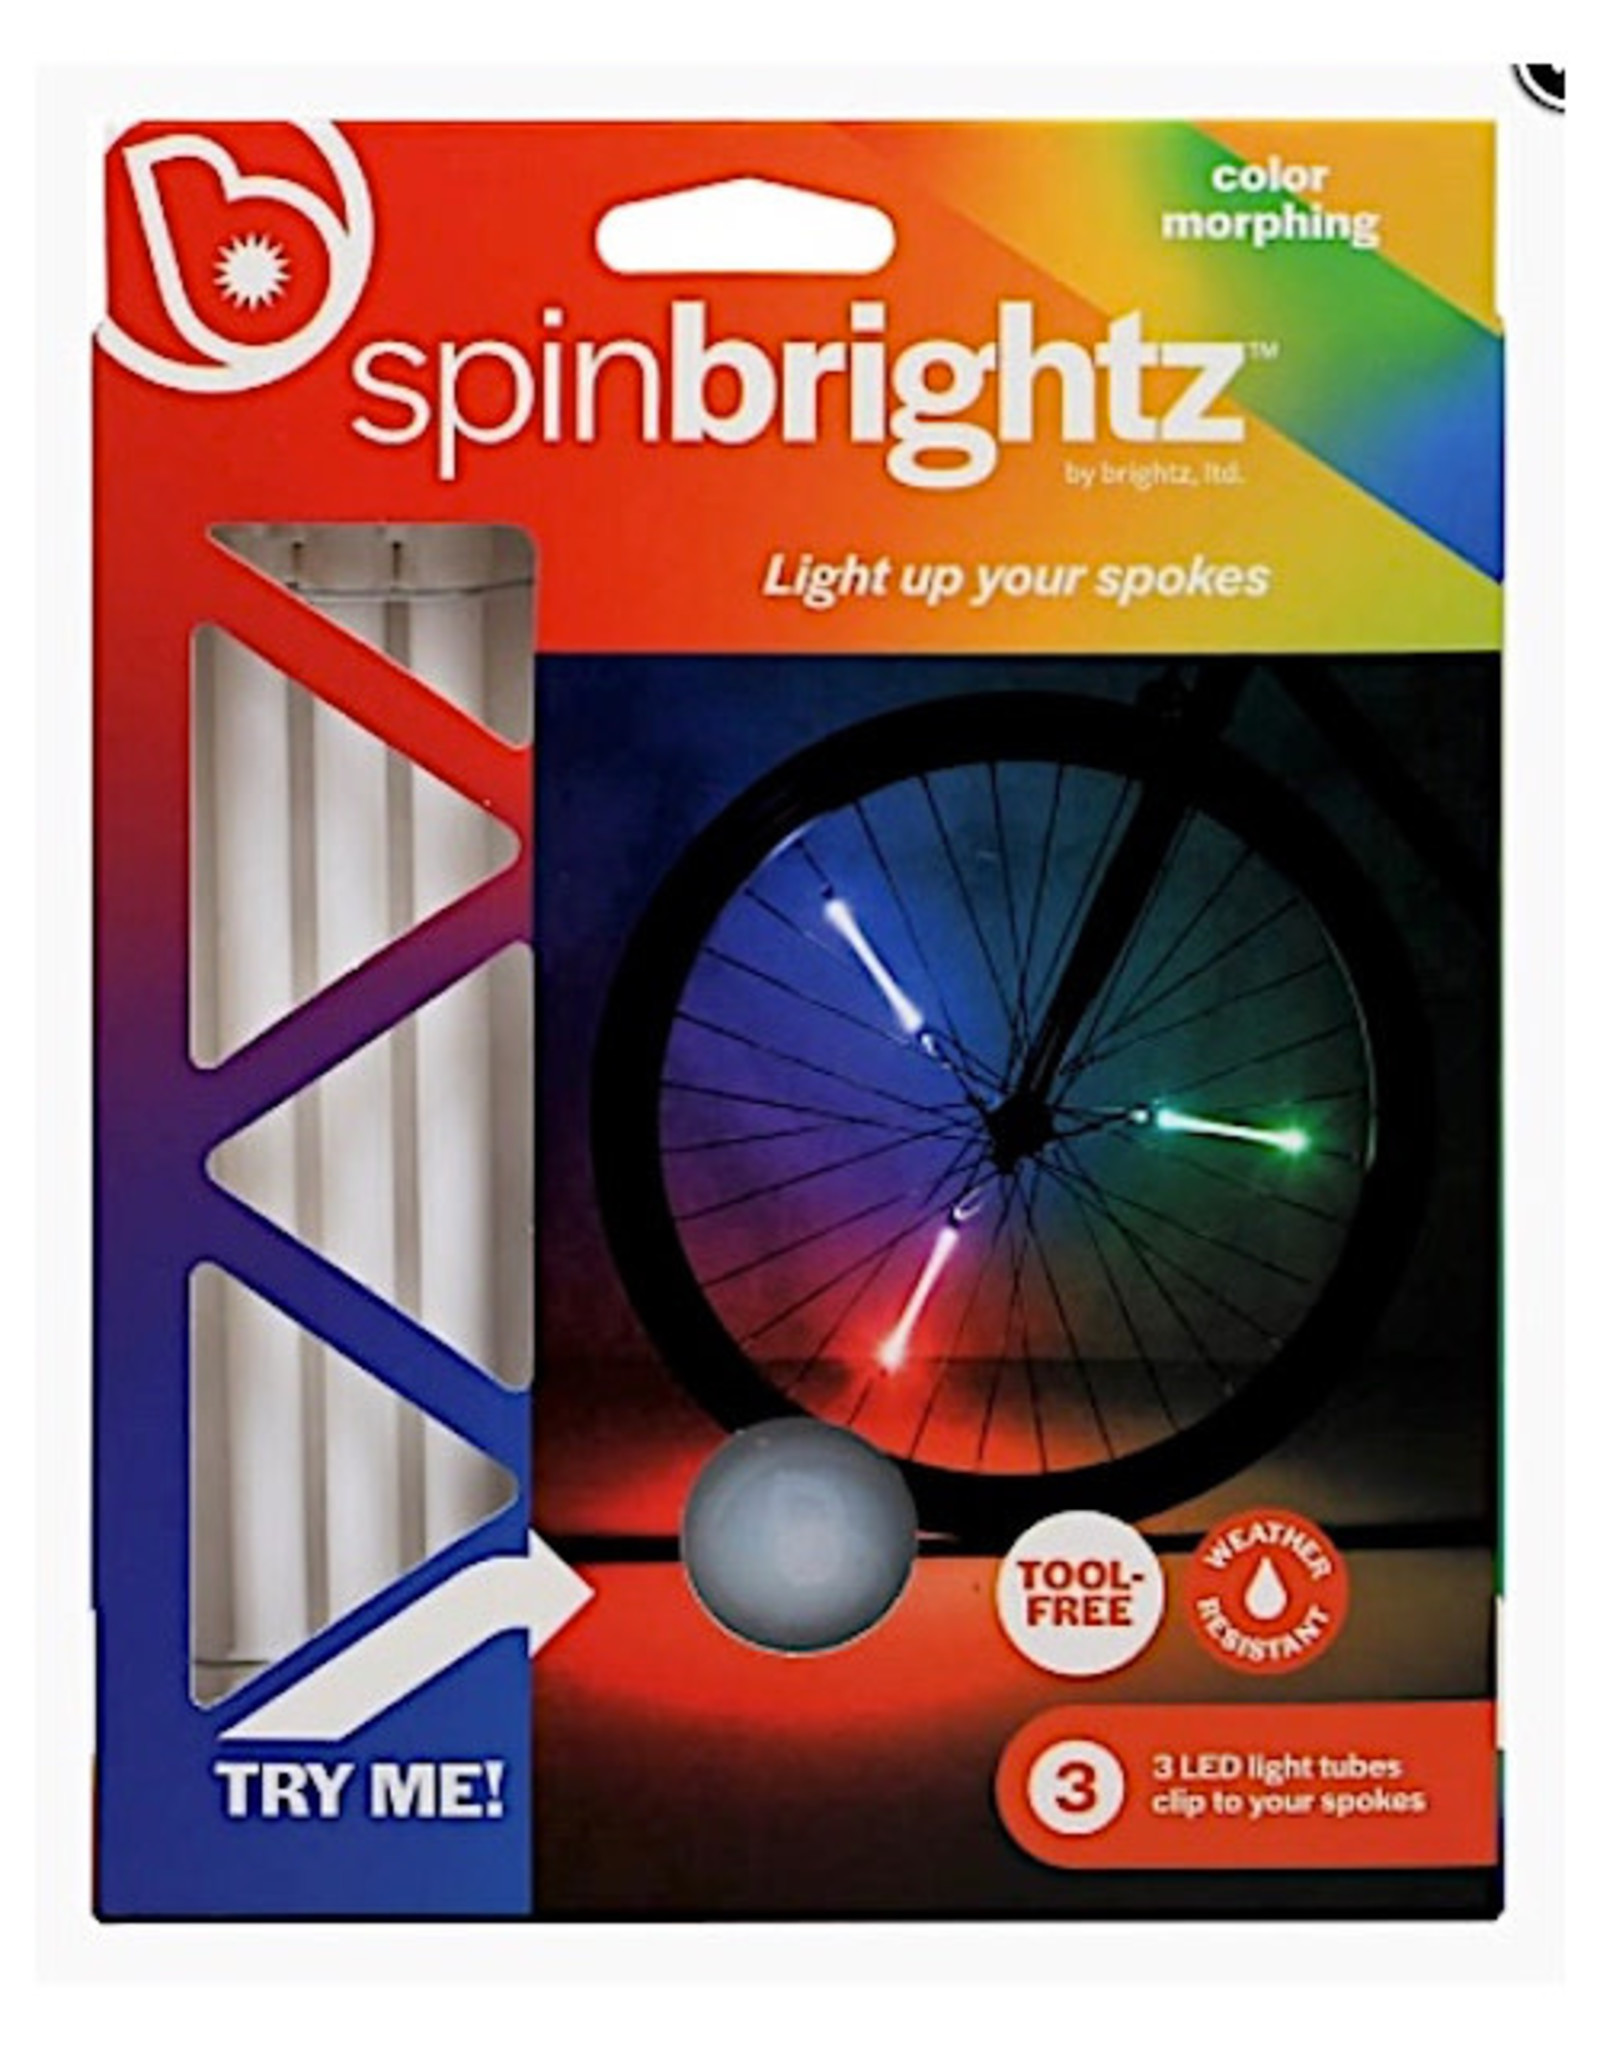 Brightz Spin Brightz